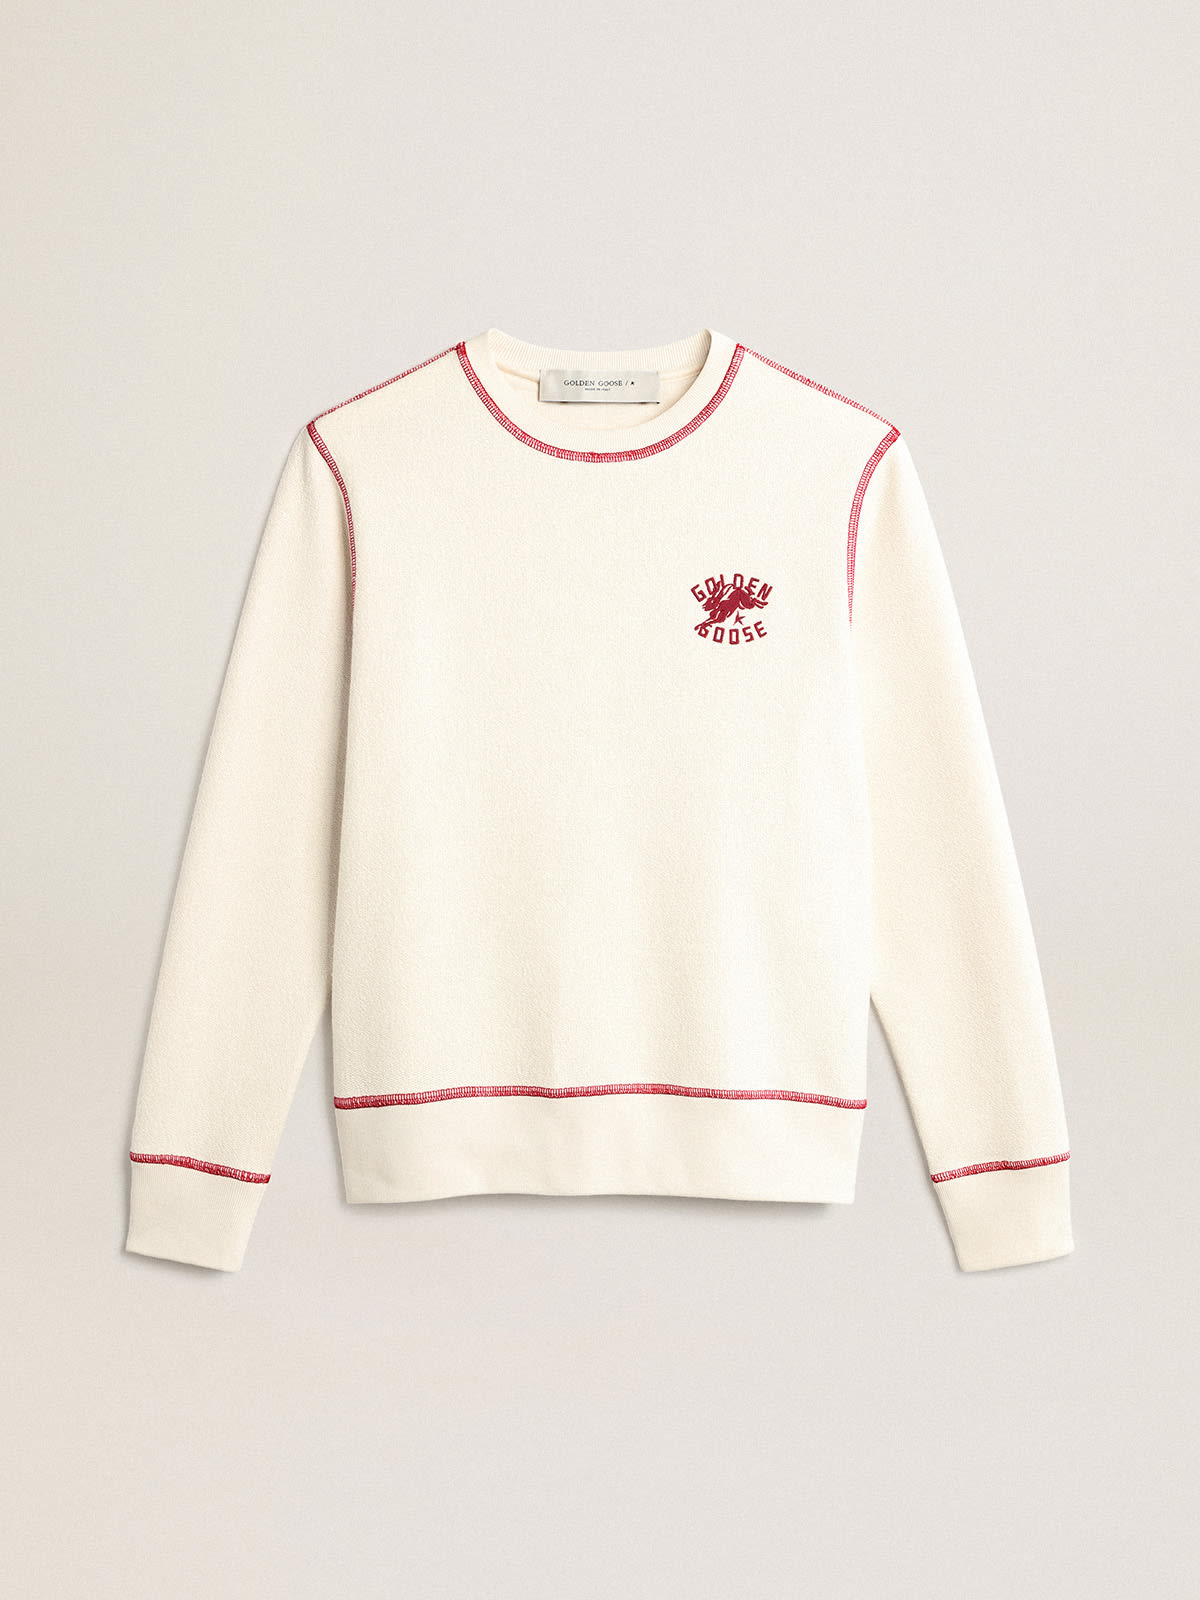 Golden Goose - Women’s heritage white sweatshirt with CNY logo in 